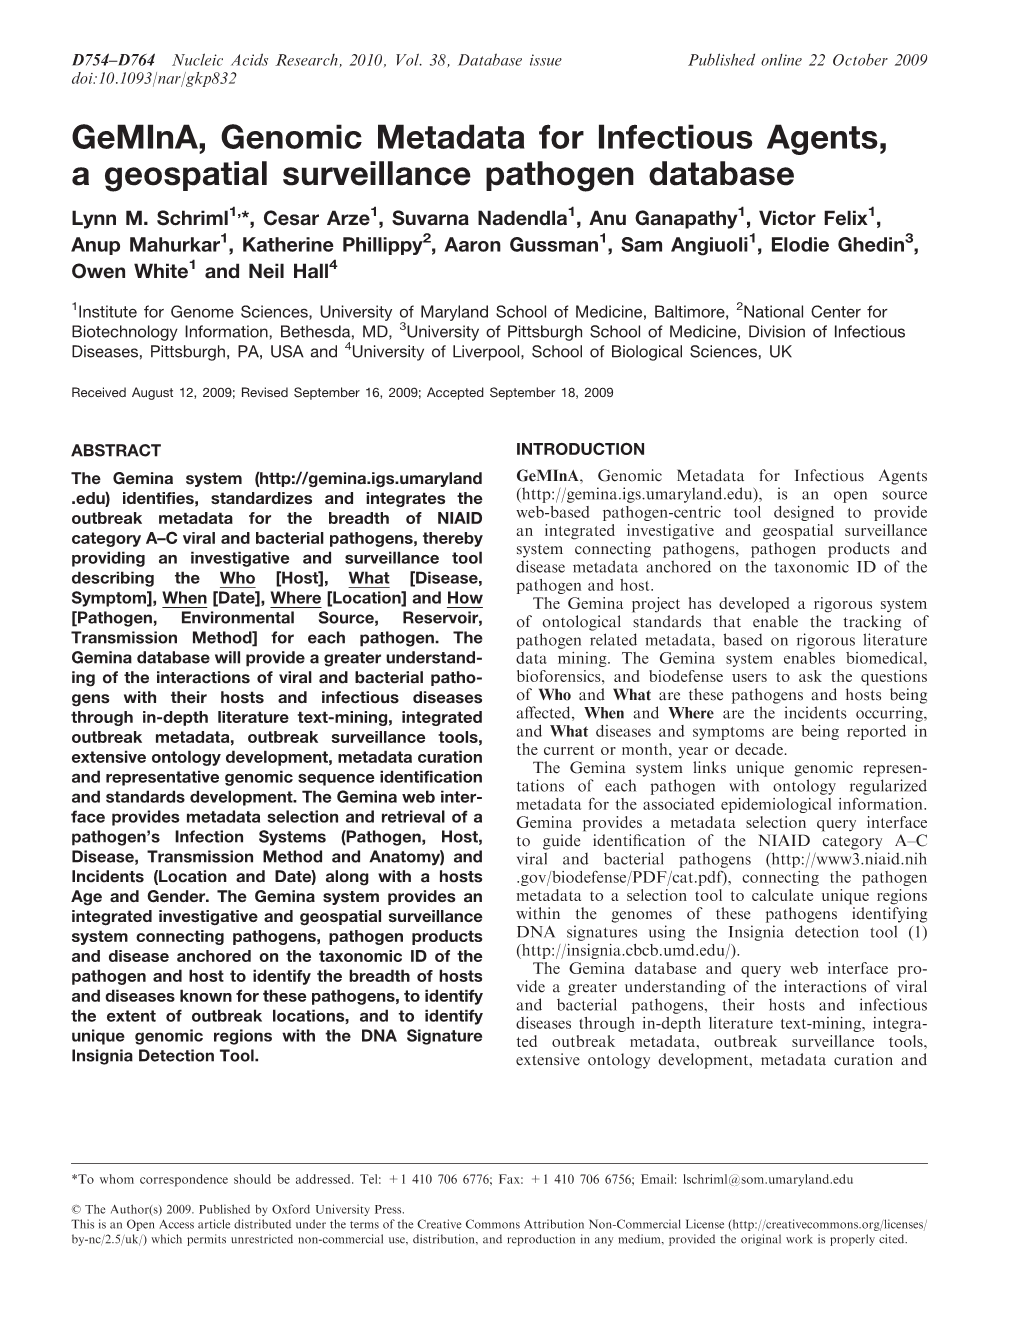 Gemina, Genomic Metadata for Infectious Agents, a Geospatial Surveillance Pathogen Database Lynn M